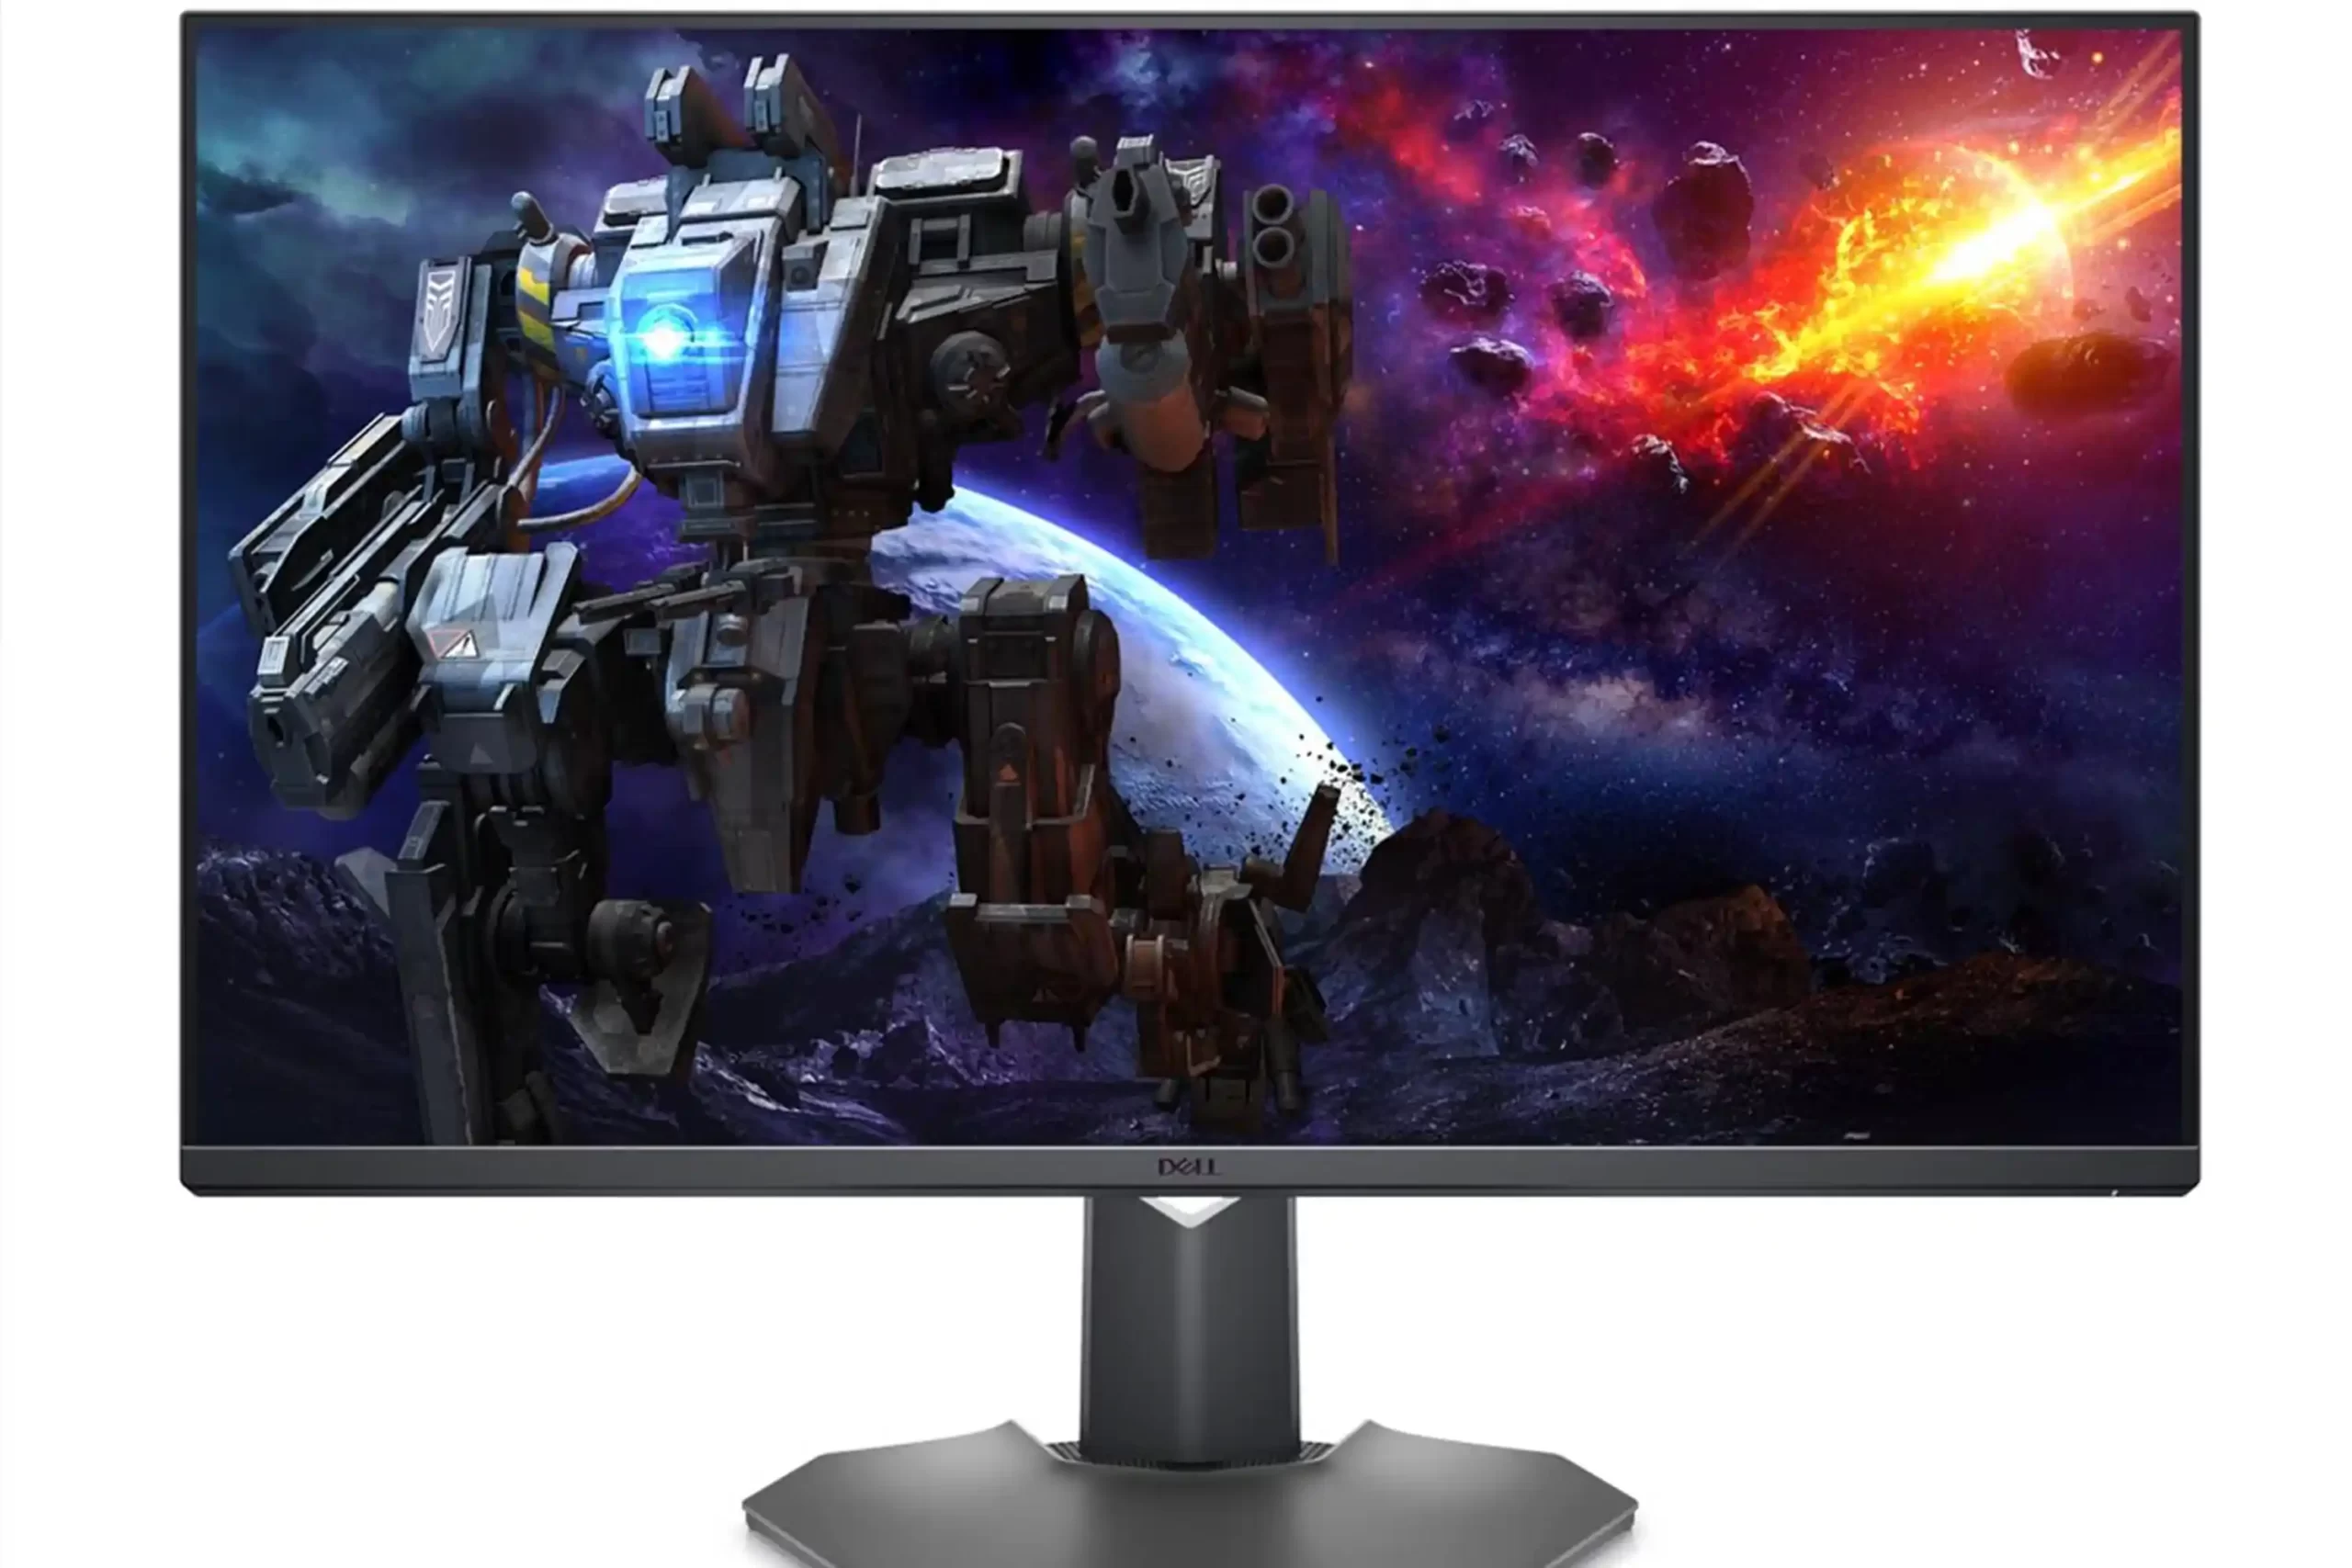 Dell's new monitors